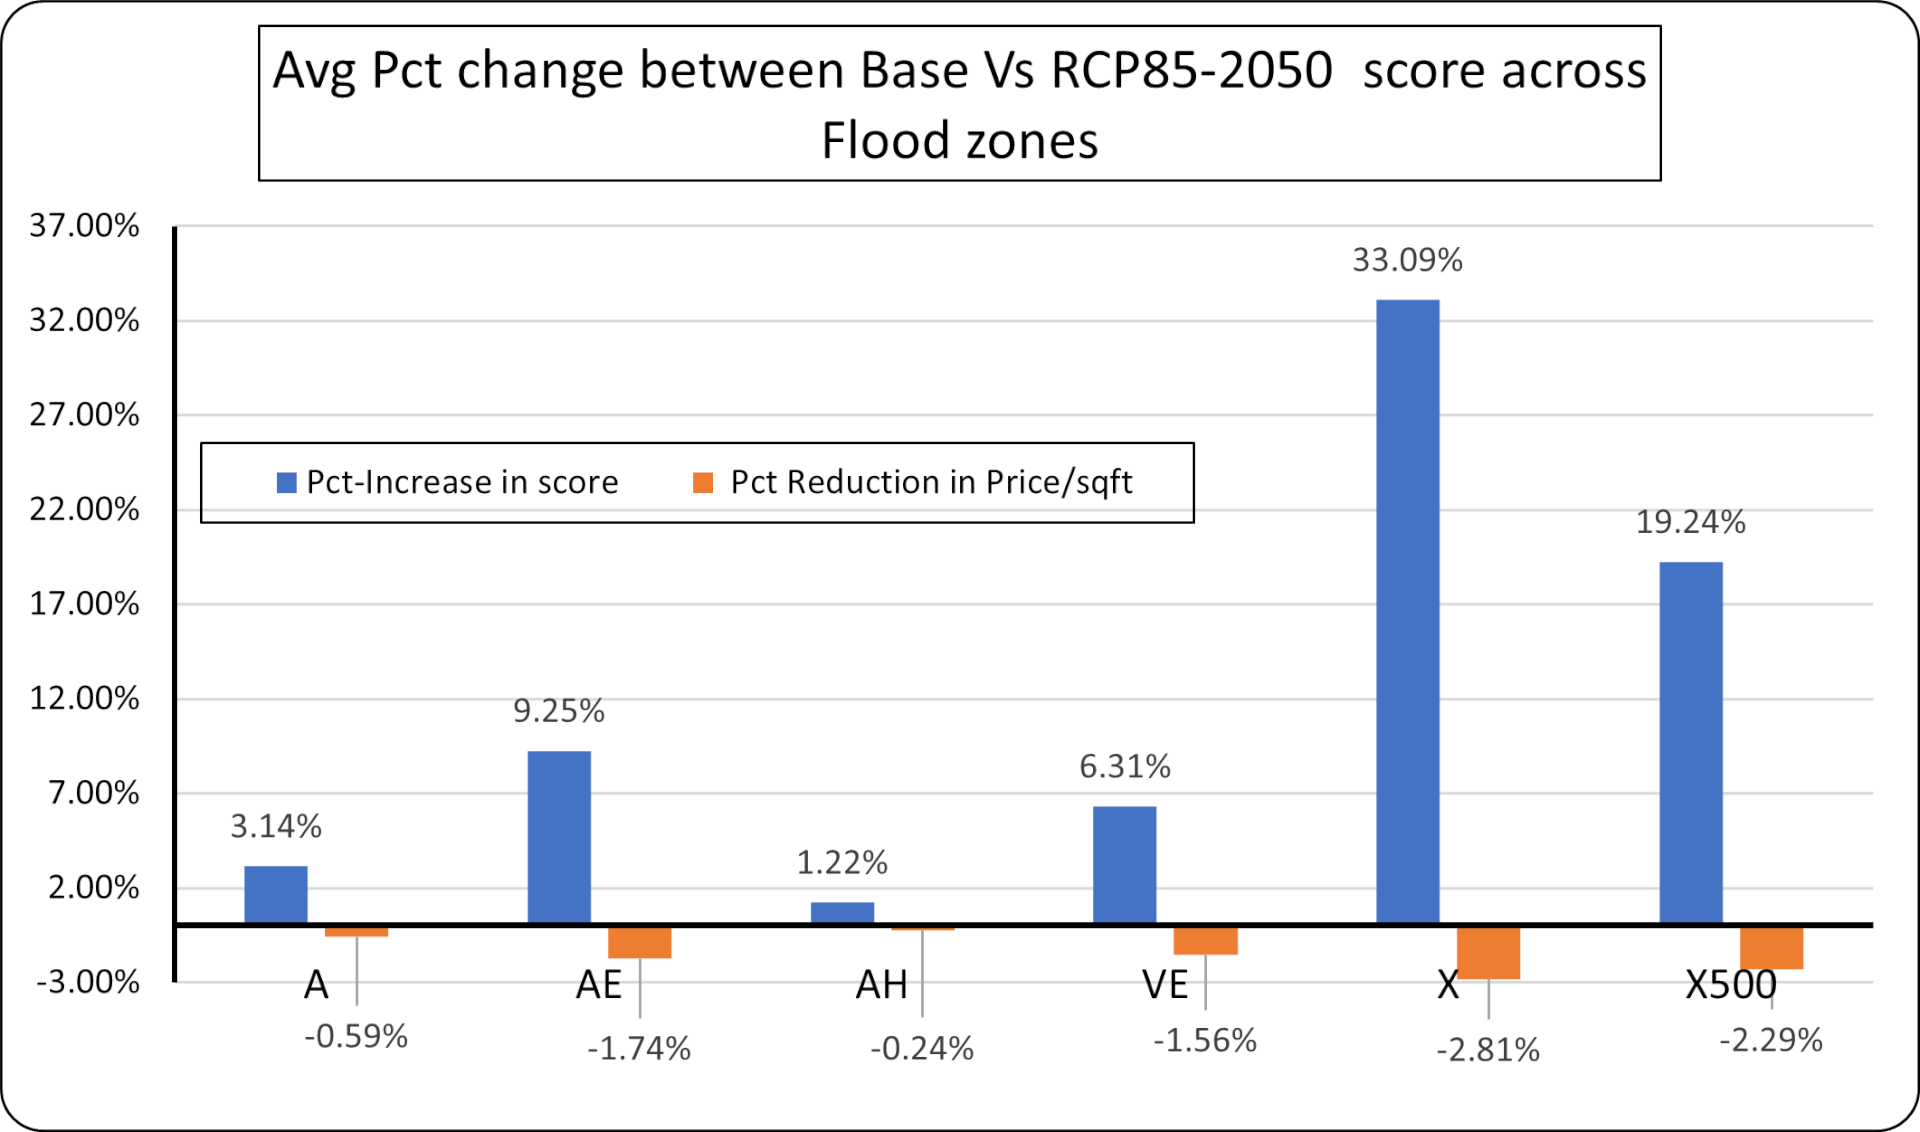 Figure 2: Average percentage change between the base and RCP8.5 scenarios across flood zones